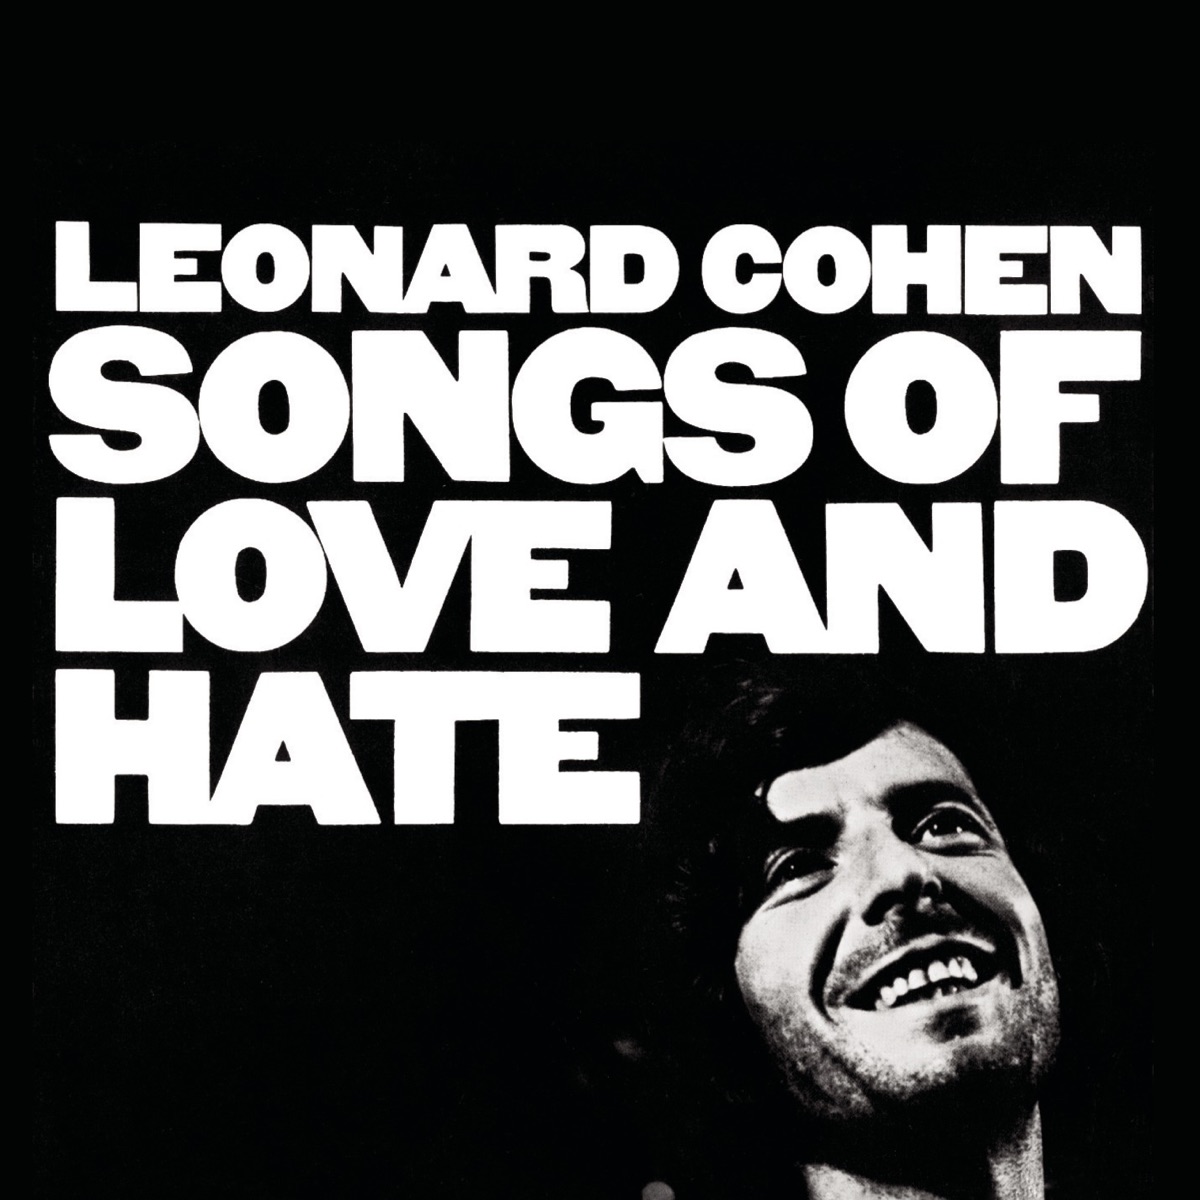 Ten New Songs - Album by Leonard Cohen - Apple Music